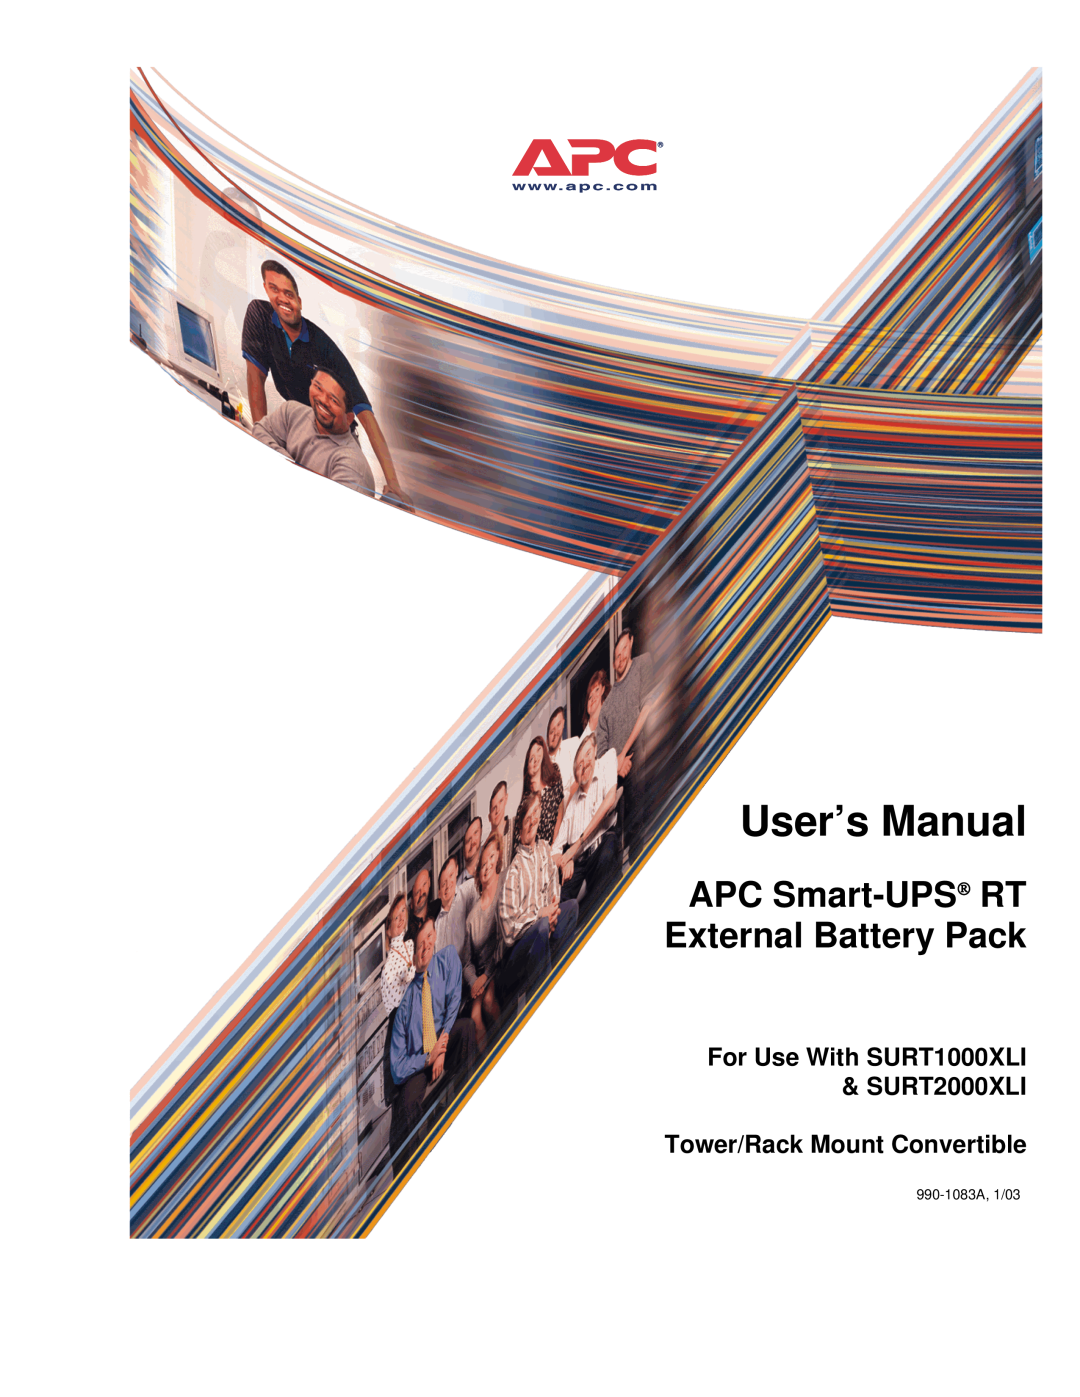 APC SURT2000XLI user manual User’s Manual, APC Smart-UPS RT External Battery Pack, Tower/Rack Mount Convertible 